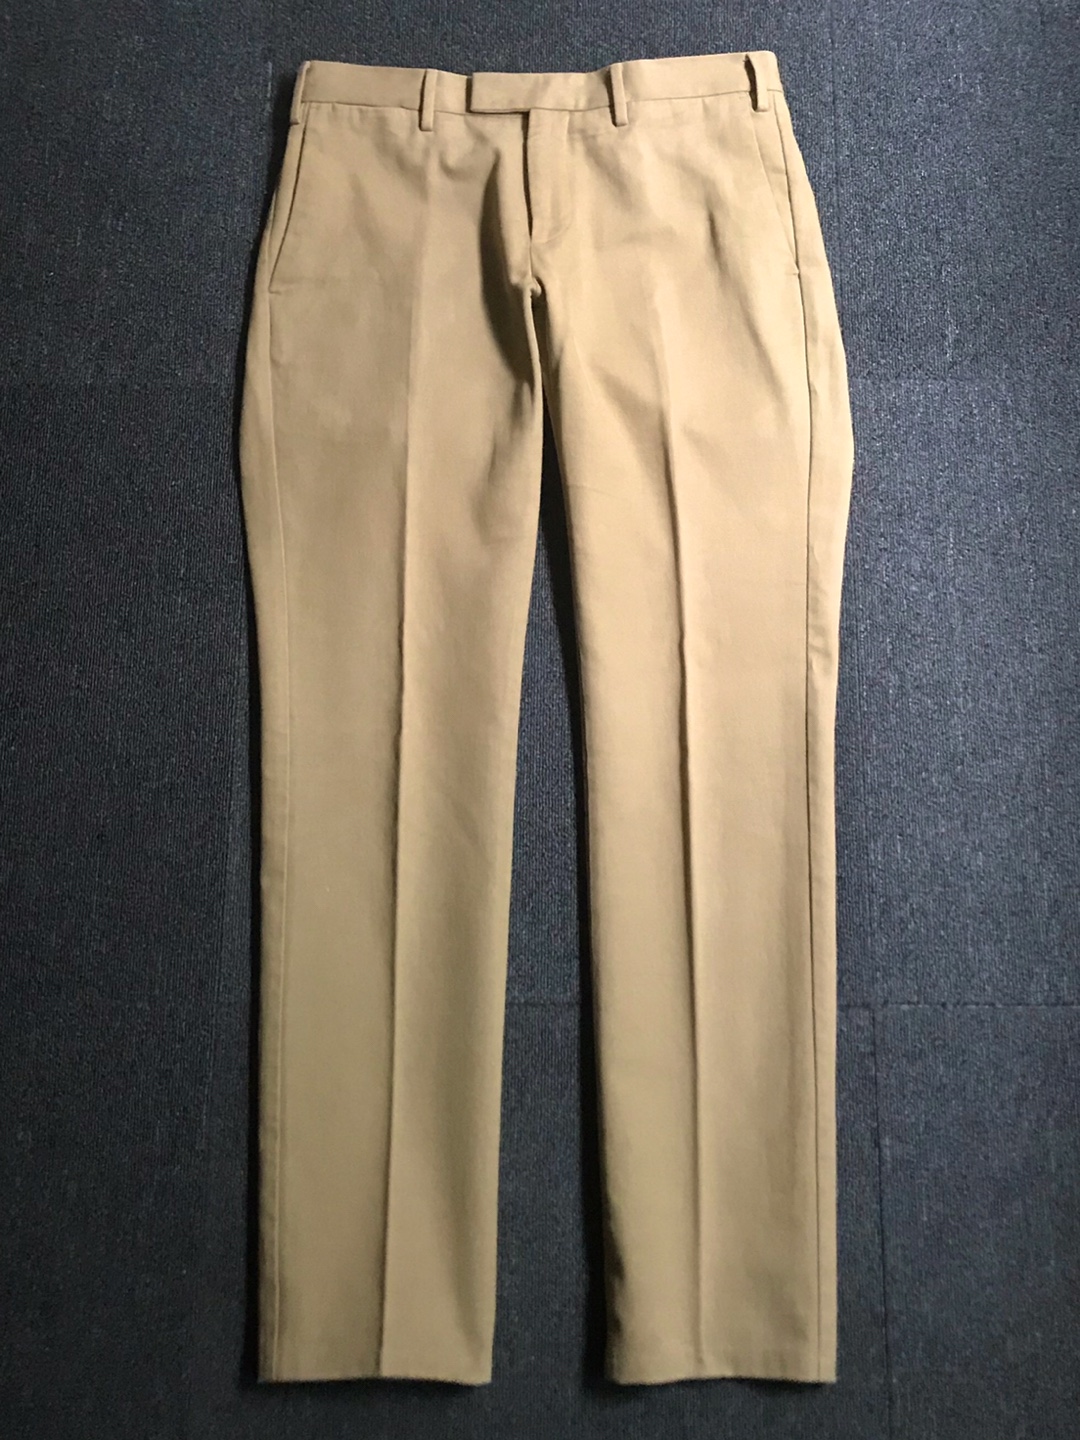 Polo RL fine European tailoring slim fit pants (33/32 size,